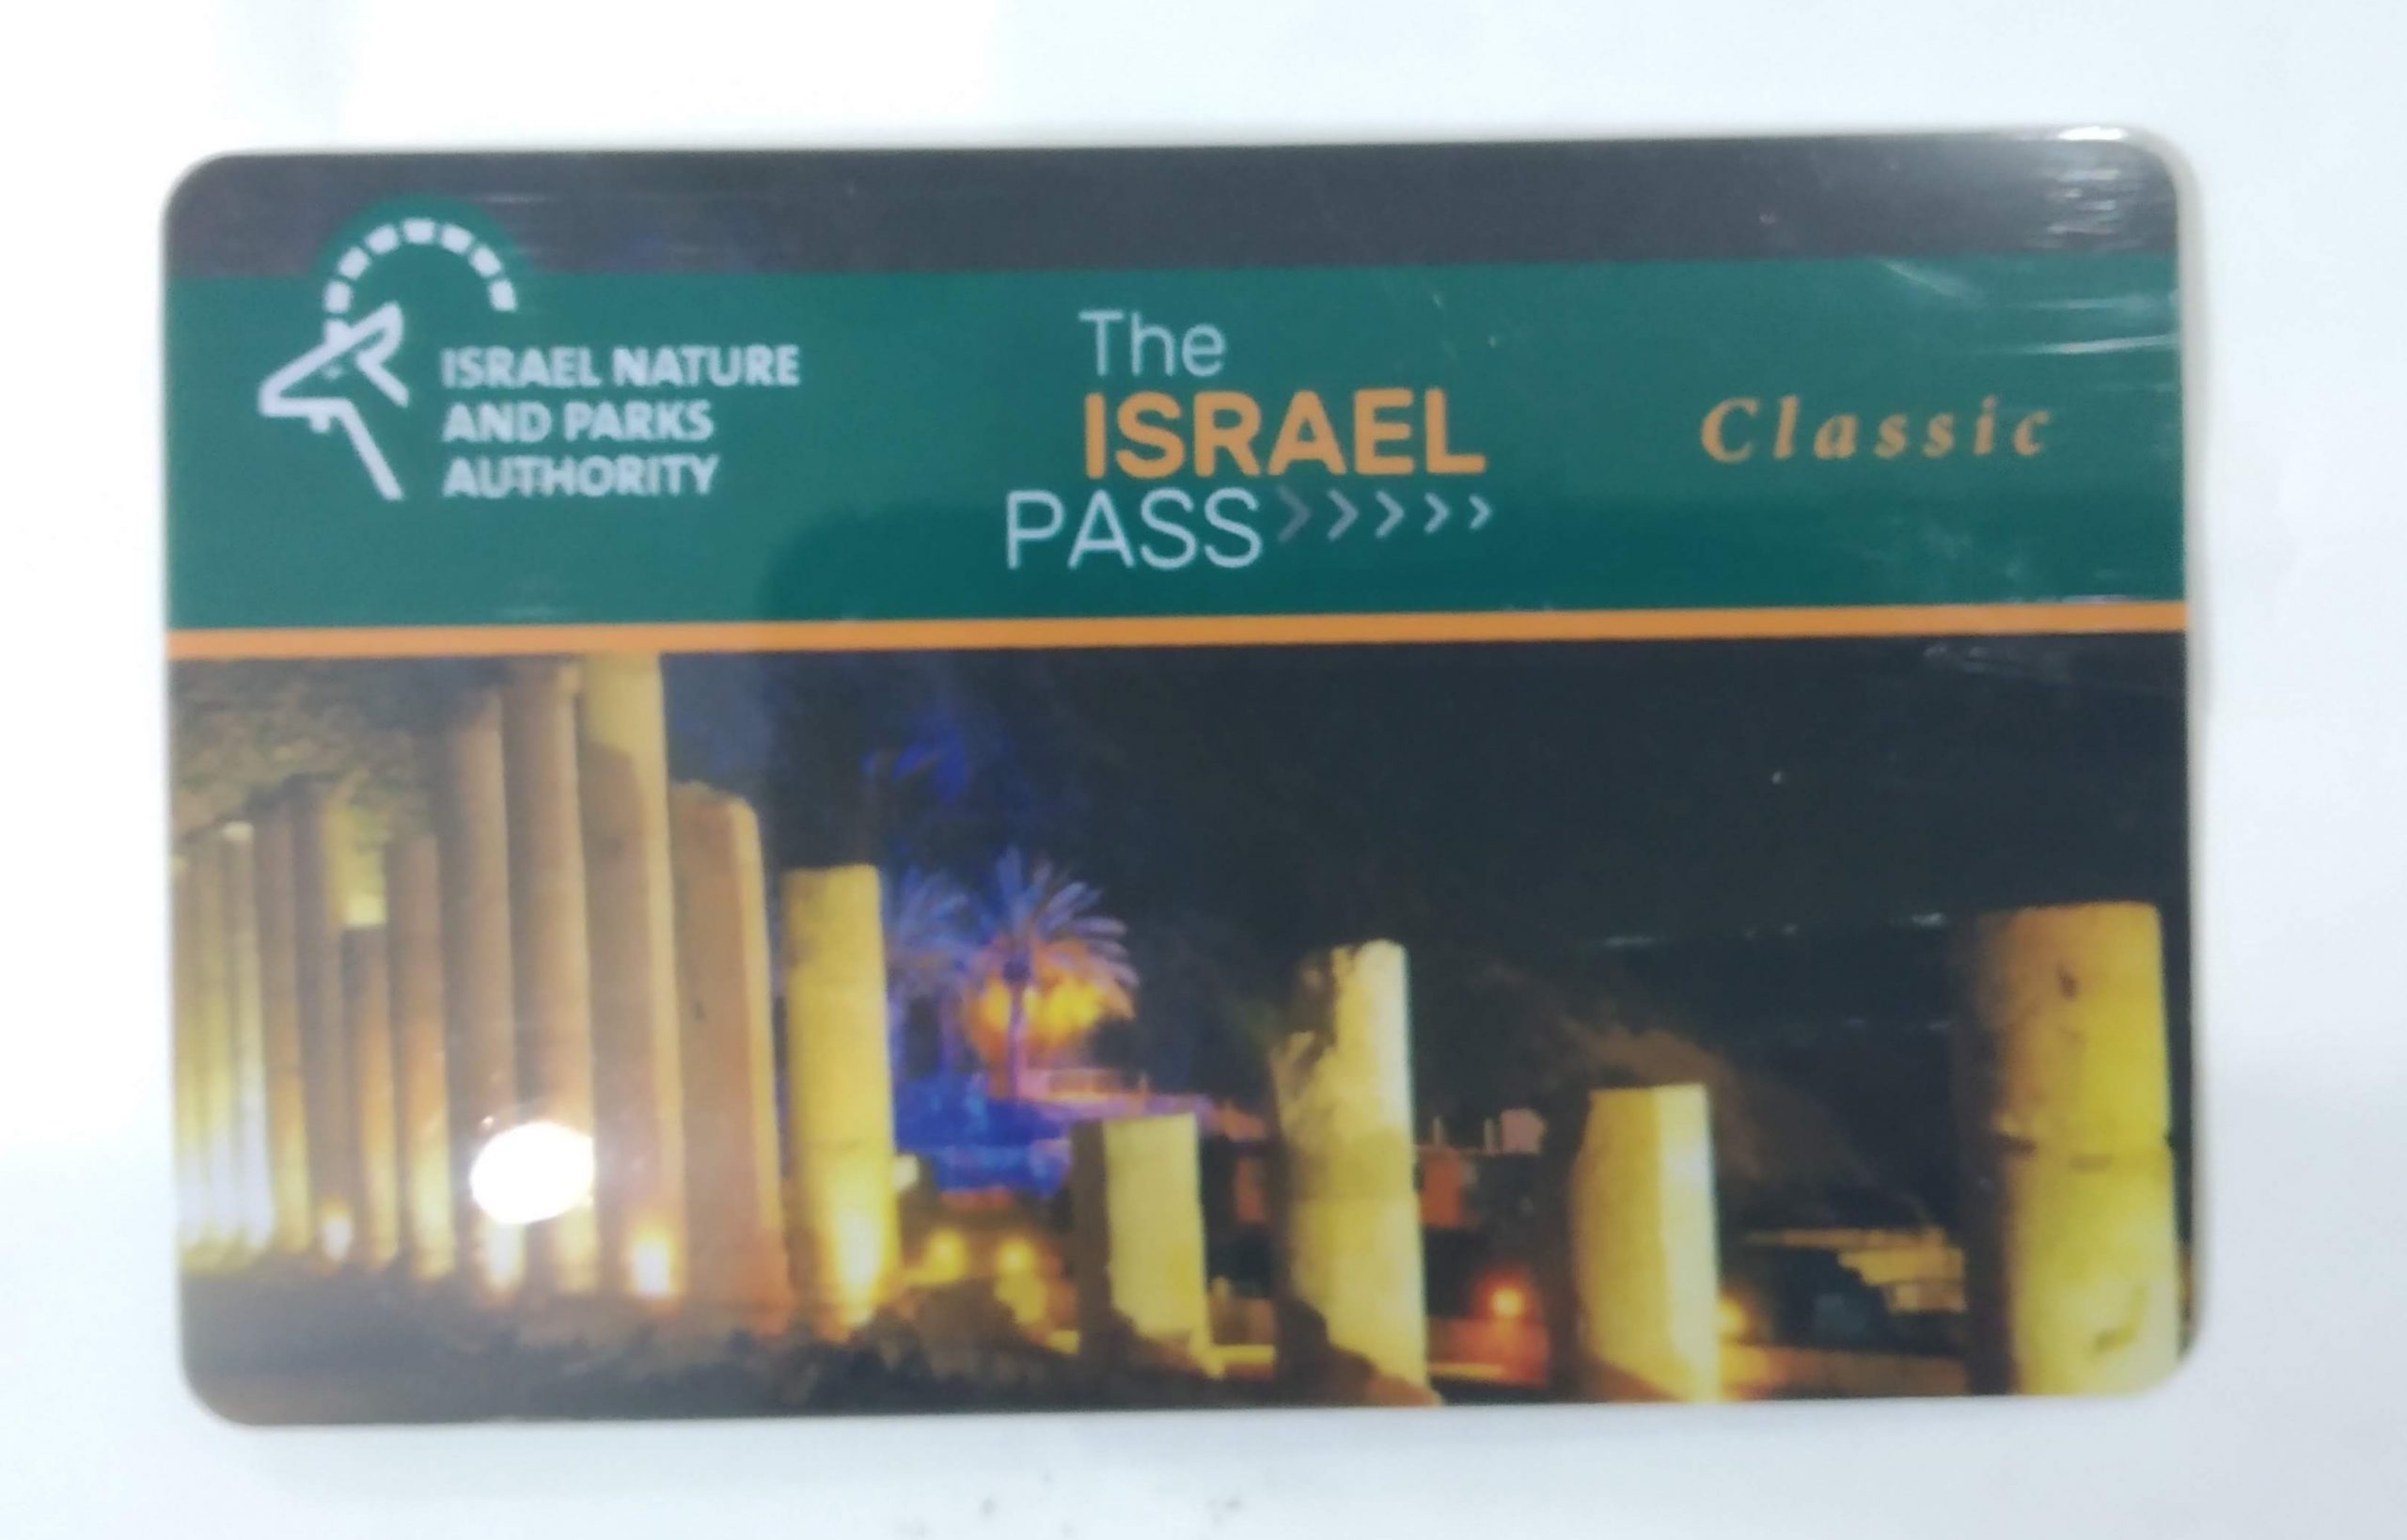 israel tourist pass